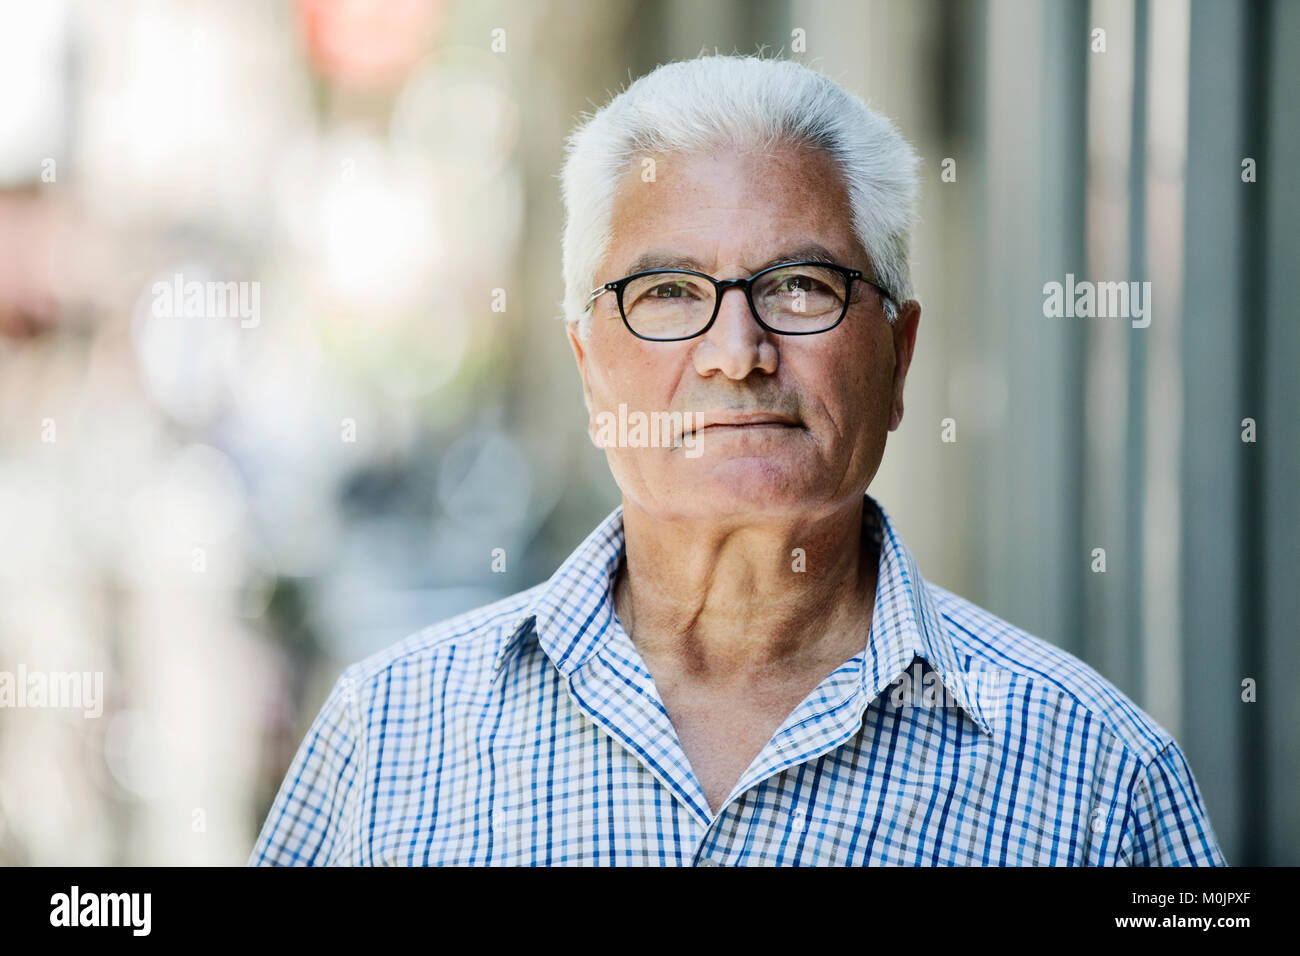 Grey-haired Senior with glasses, migration background, native Italian, portrait, Germany Stock Photo